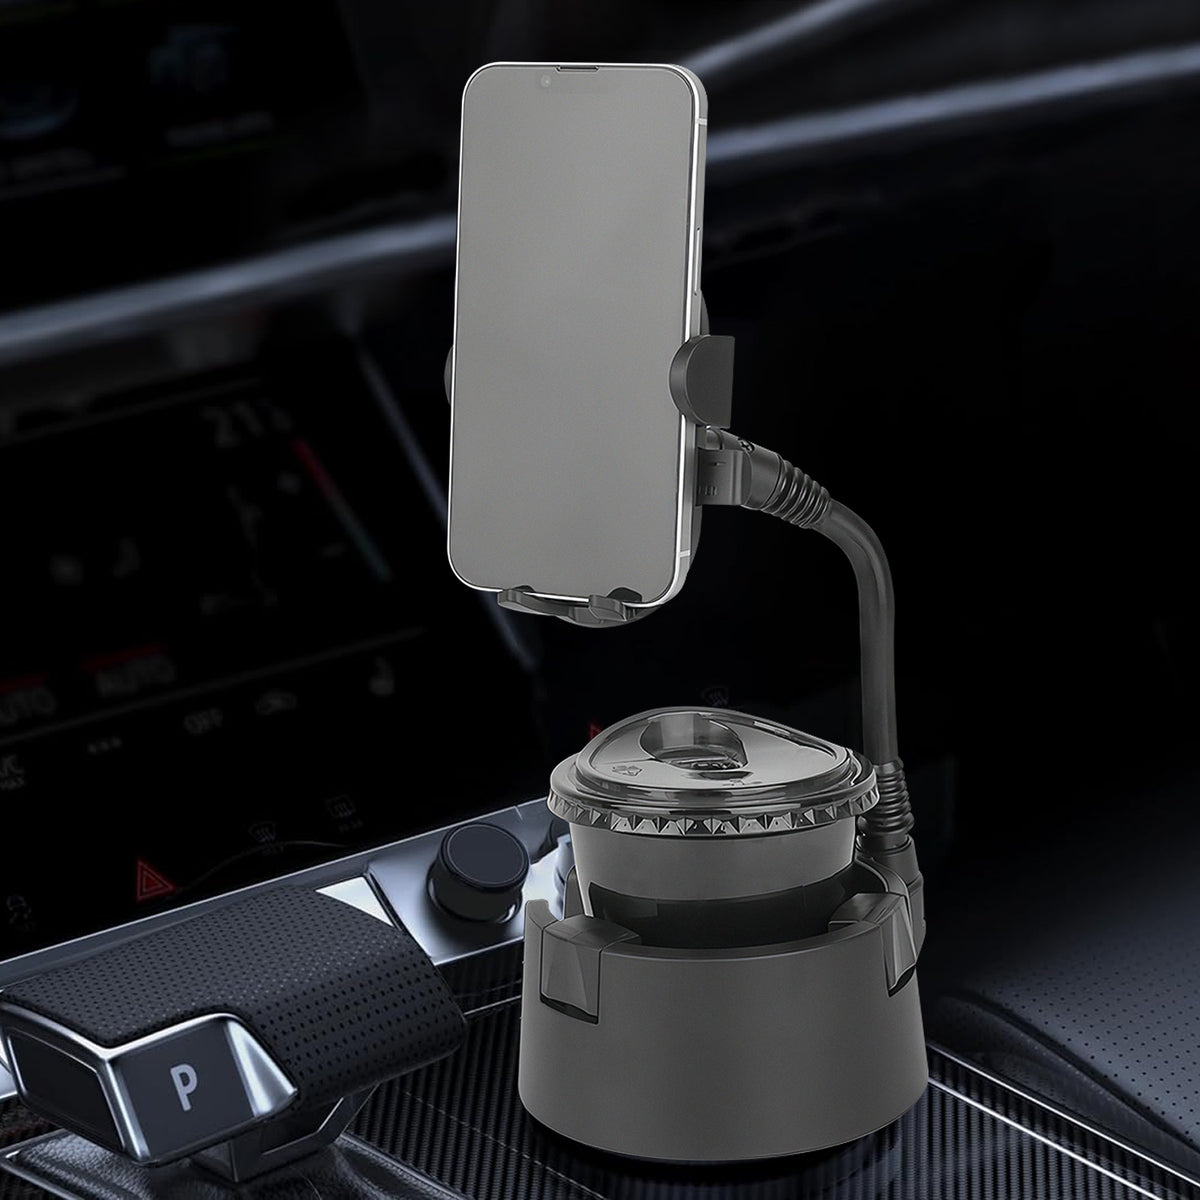 Adorila Cup Holder Phone Mount for Car, 2 in 1 Adjustable Car Cup Holder Expander, 360° Rotation Cell Phone Holder Compatible with 2.3"-3.5" Smartphones (Black)